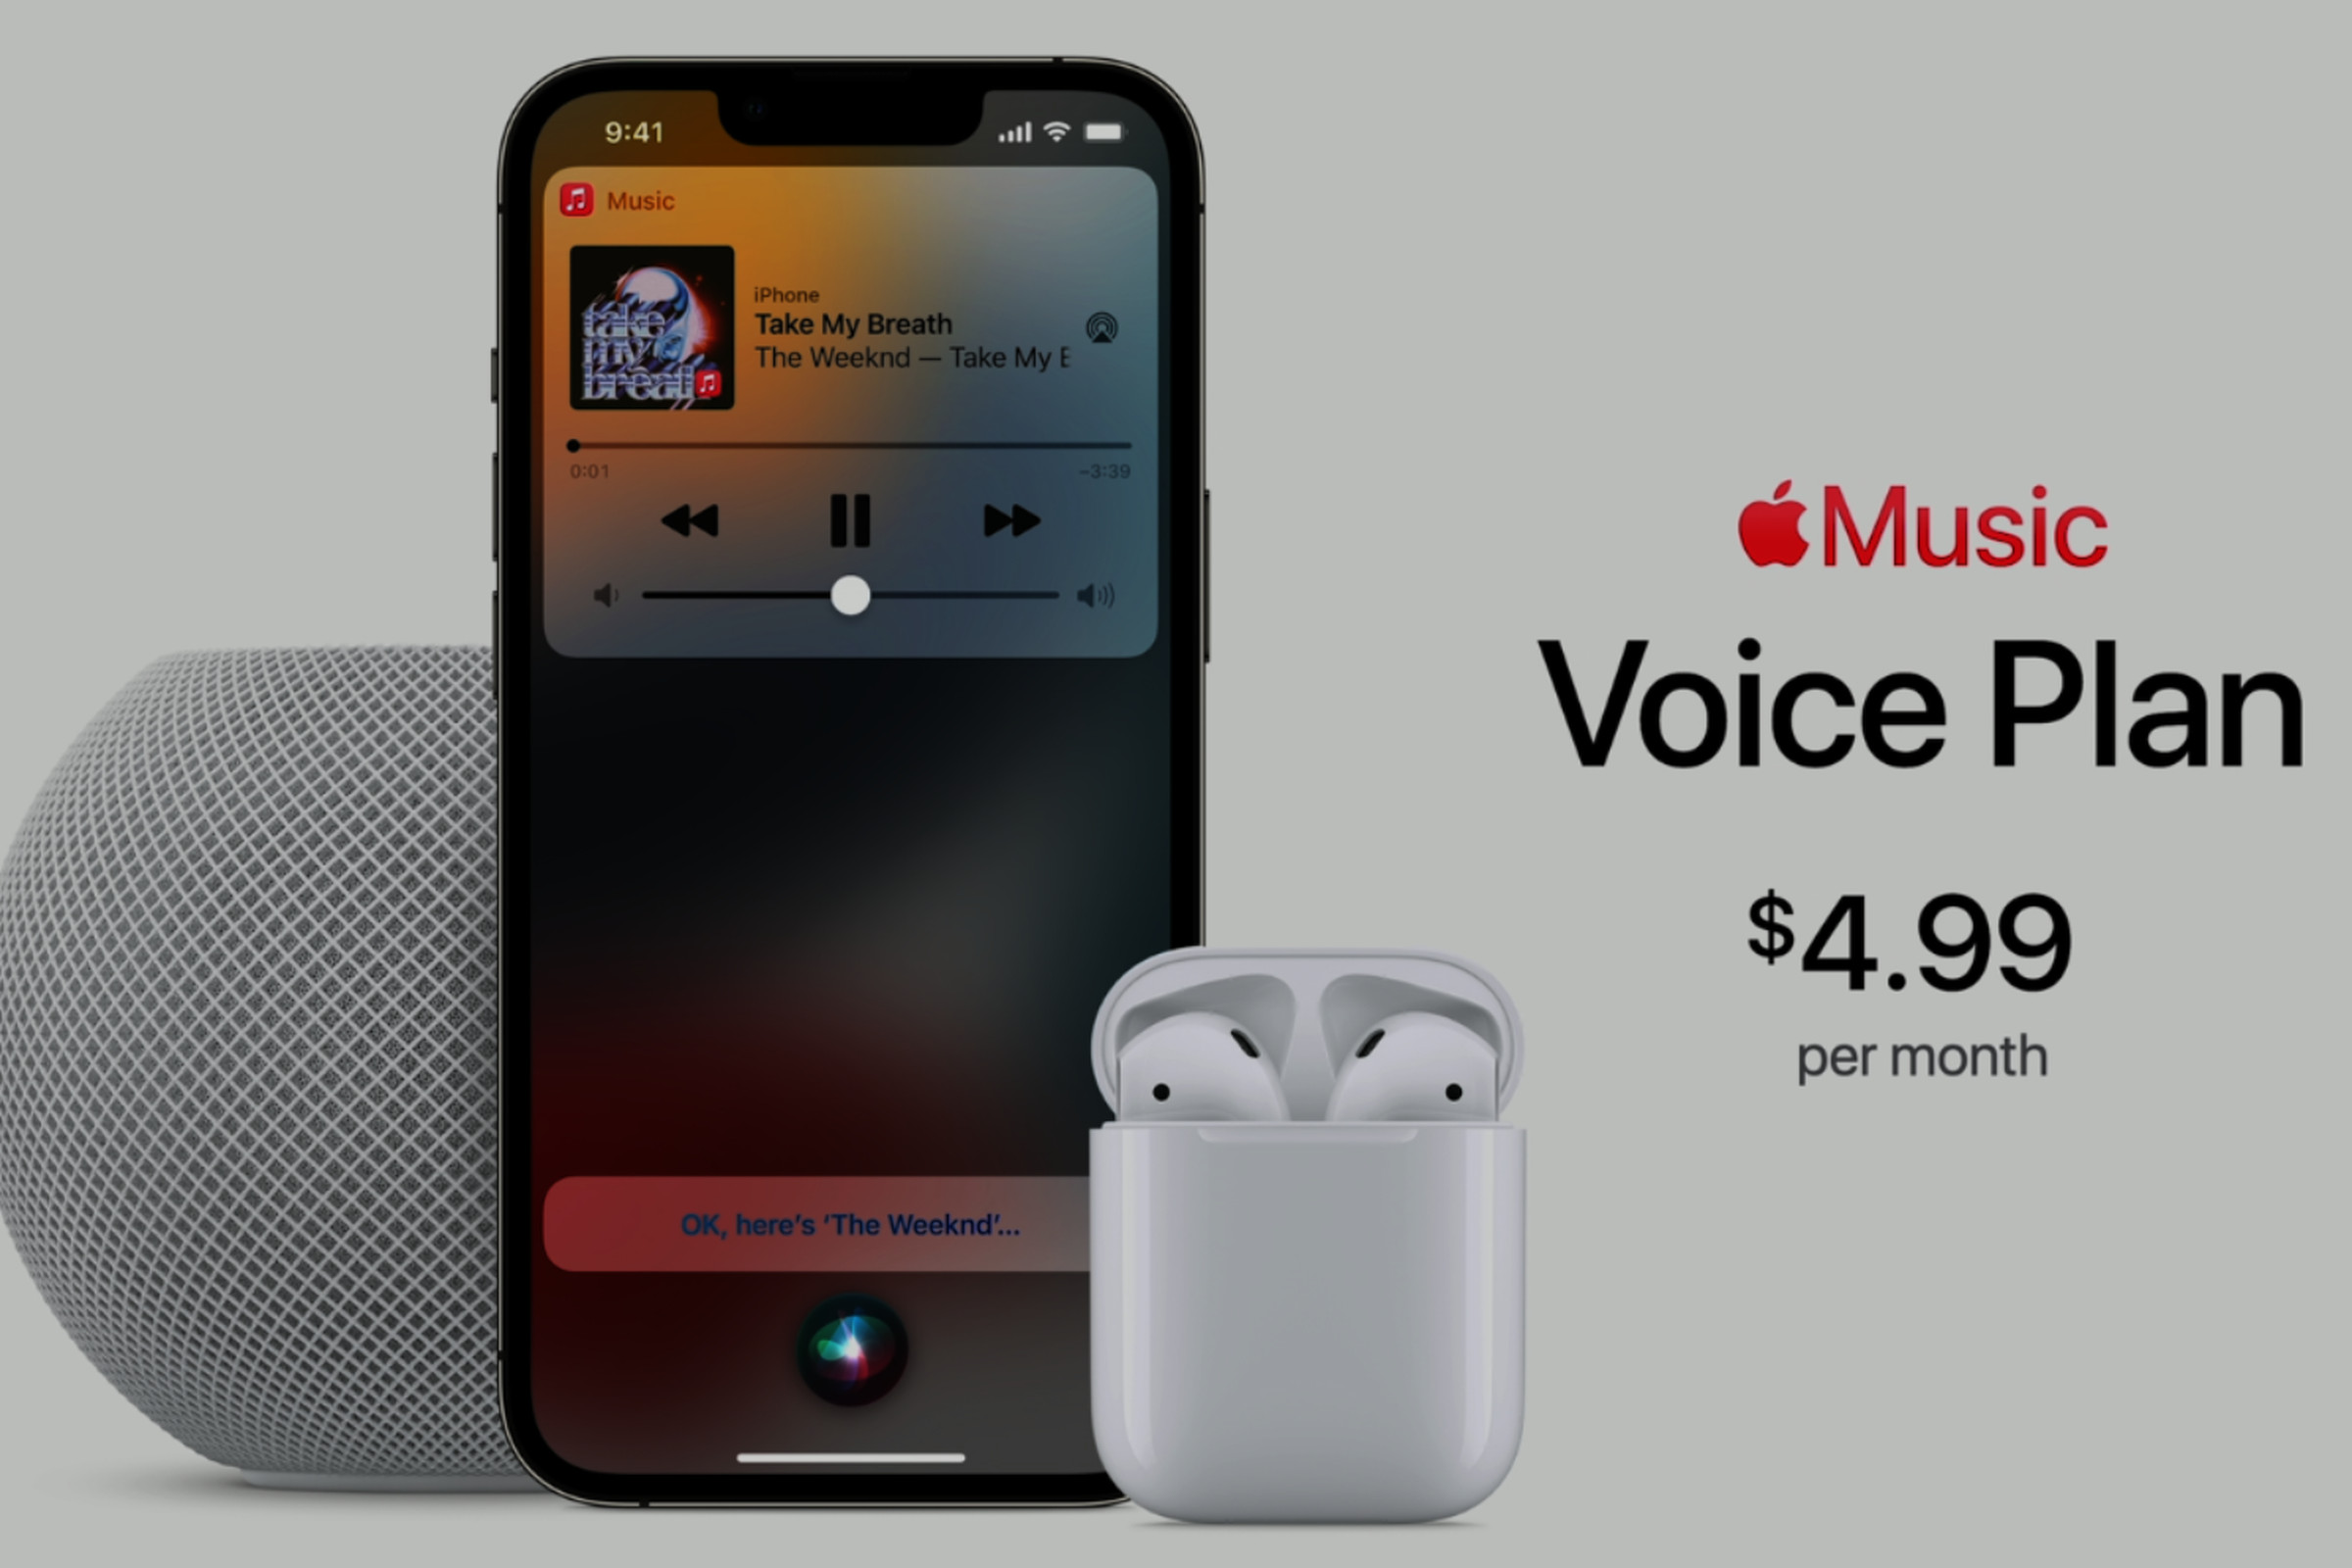 Apple Music Voice Plan lets you access music through Siri.